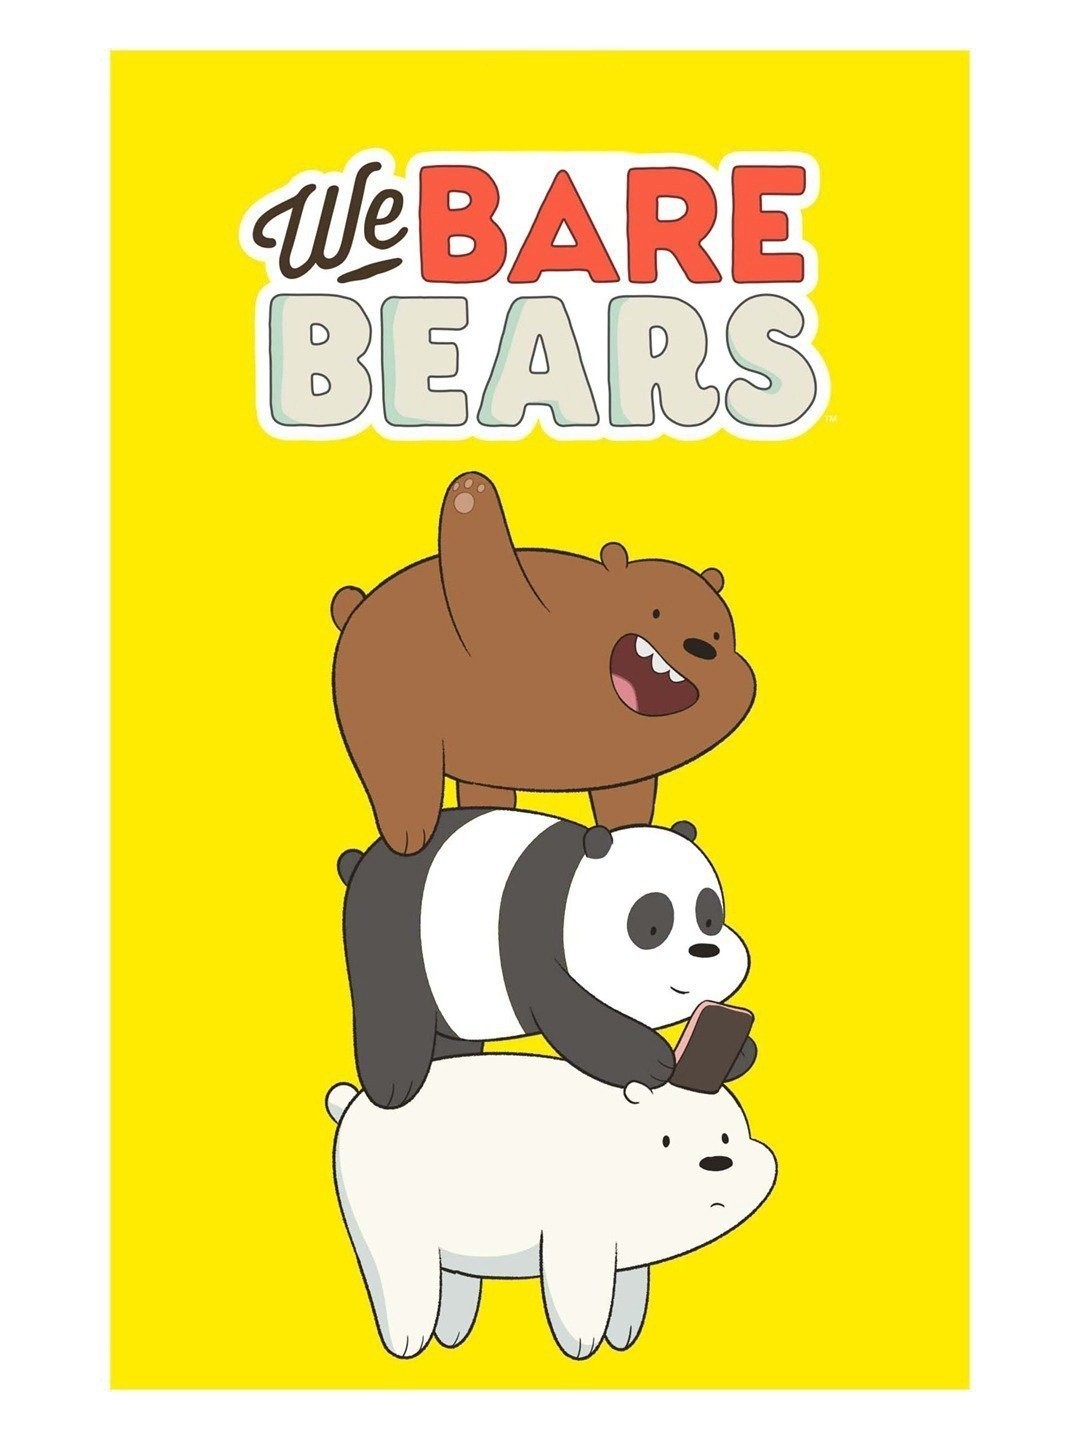 Why I Love We Bare Bears!